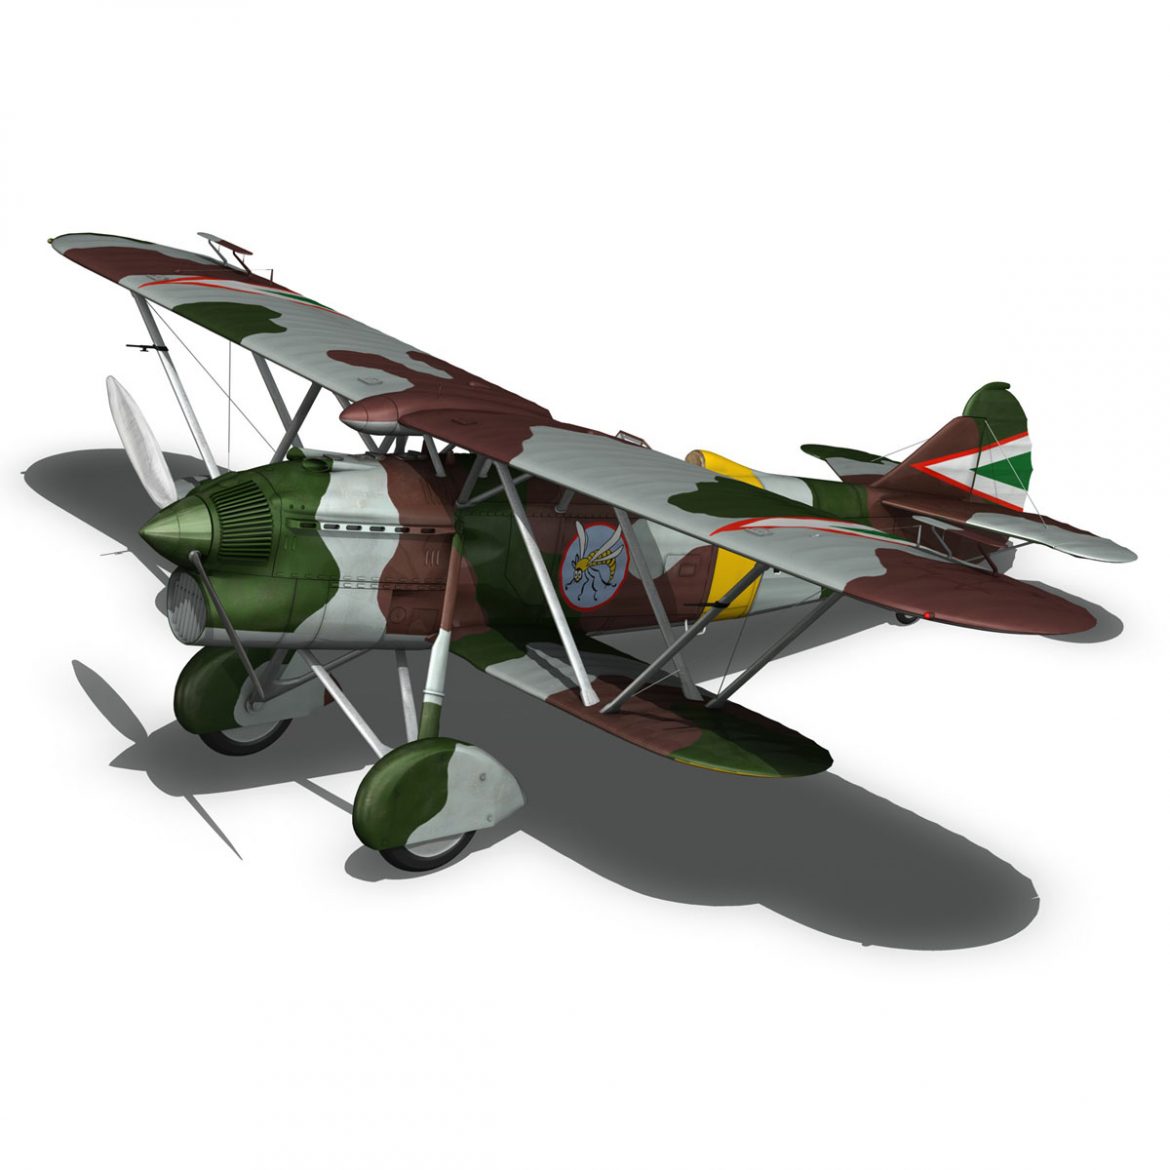 fiat cr.32 – hungarian royal air force – v159 3d model fbx c4d lwo obj 299969